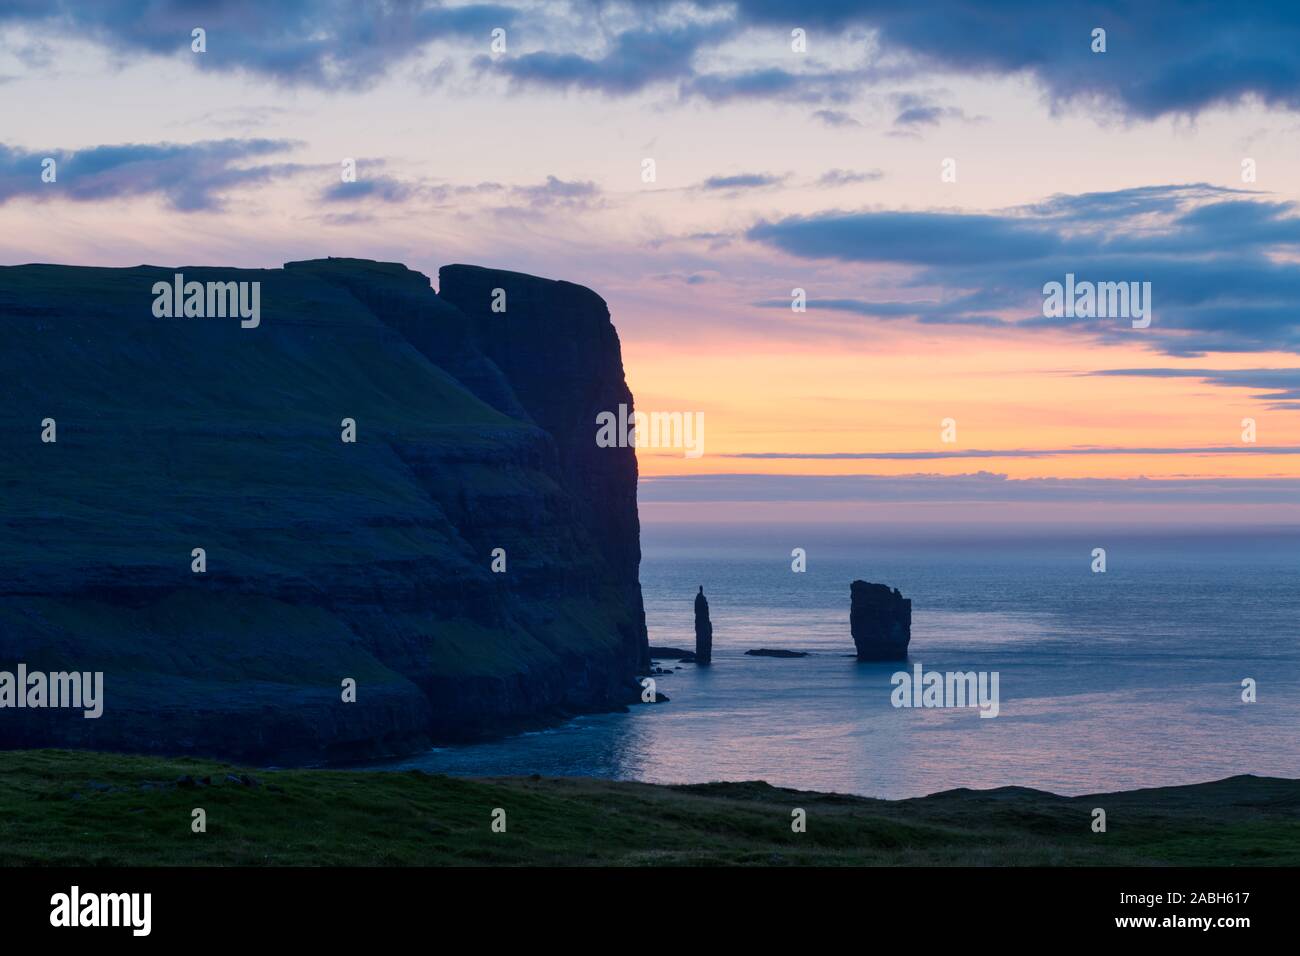 Sunrise incredibile vista la mattina su Risin og Kellingin scogliere in oceano Atlantico, Eysturoy isola, isole Faerøer, Danimarca. Fotografia di paesaggi Foto Stock